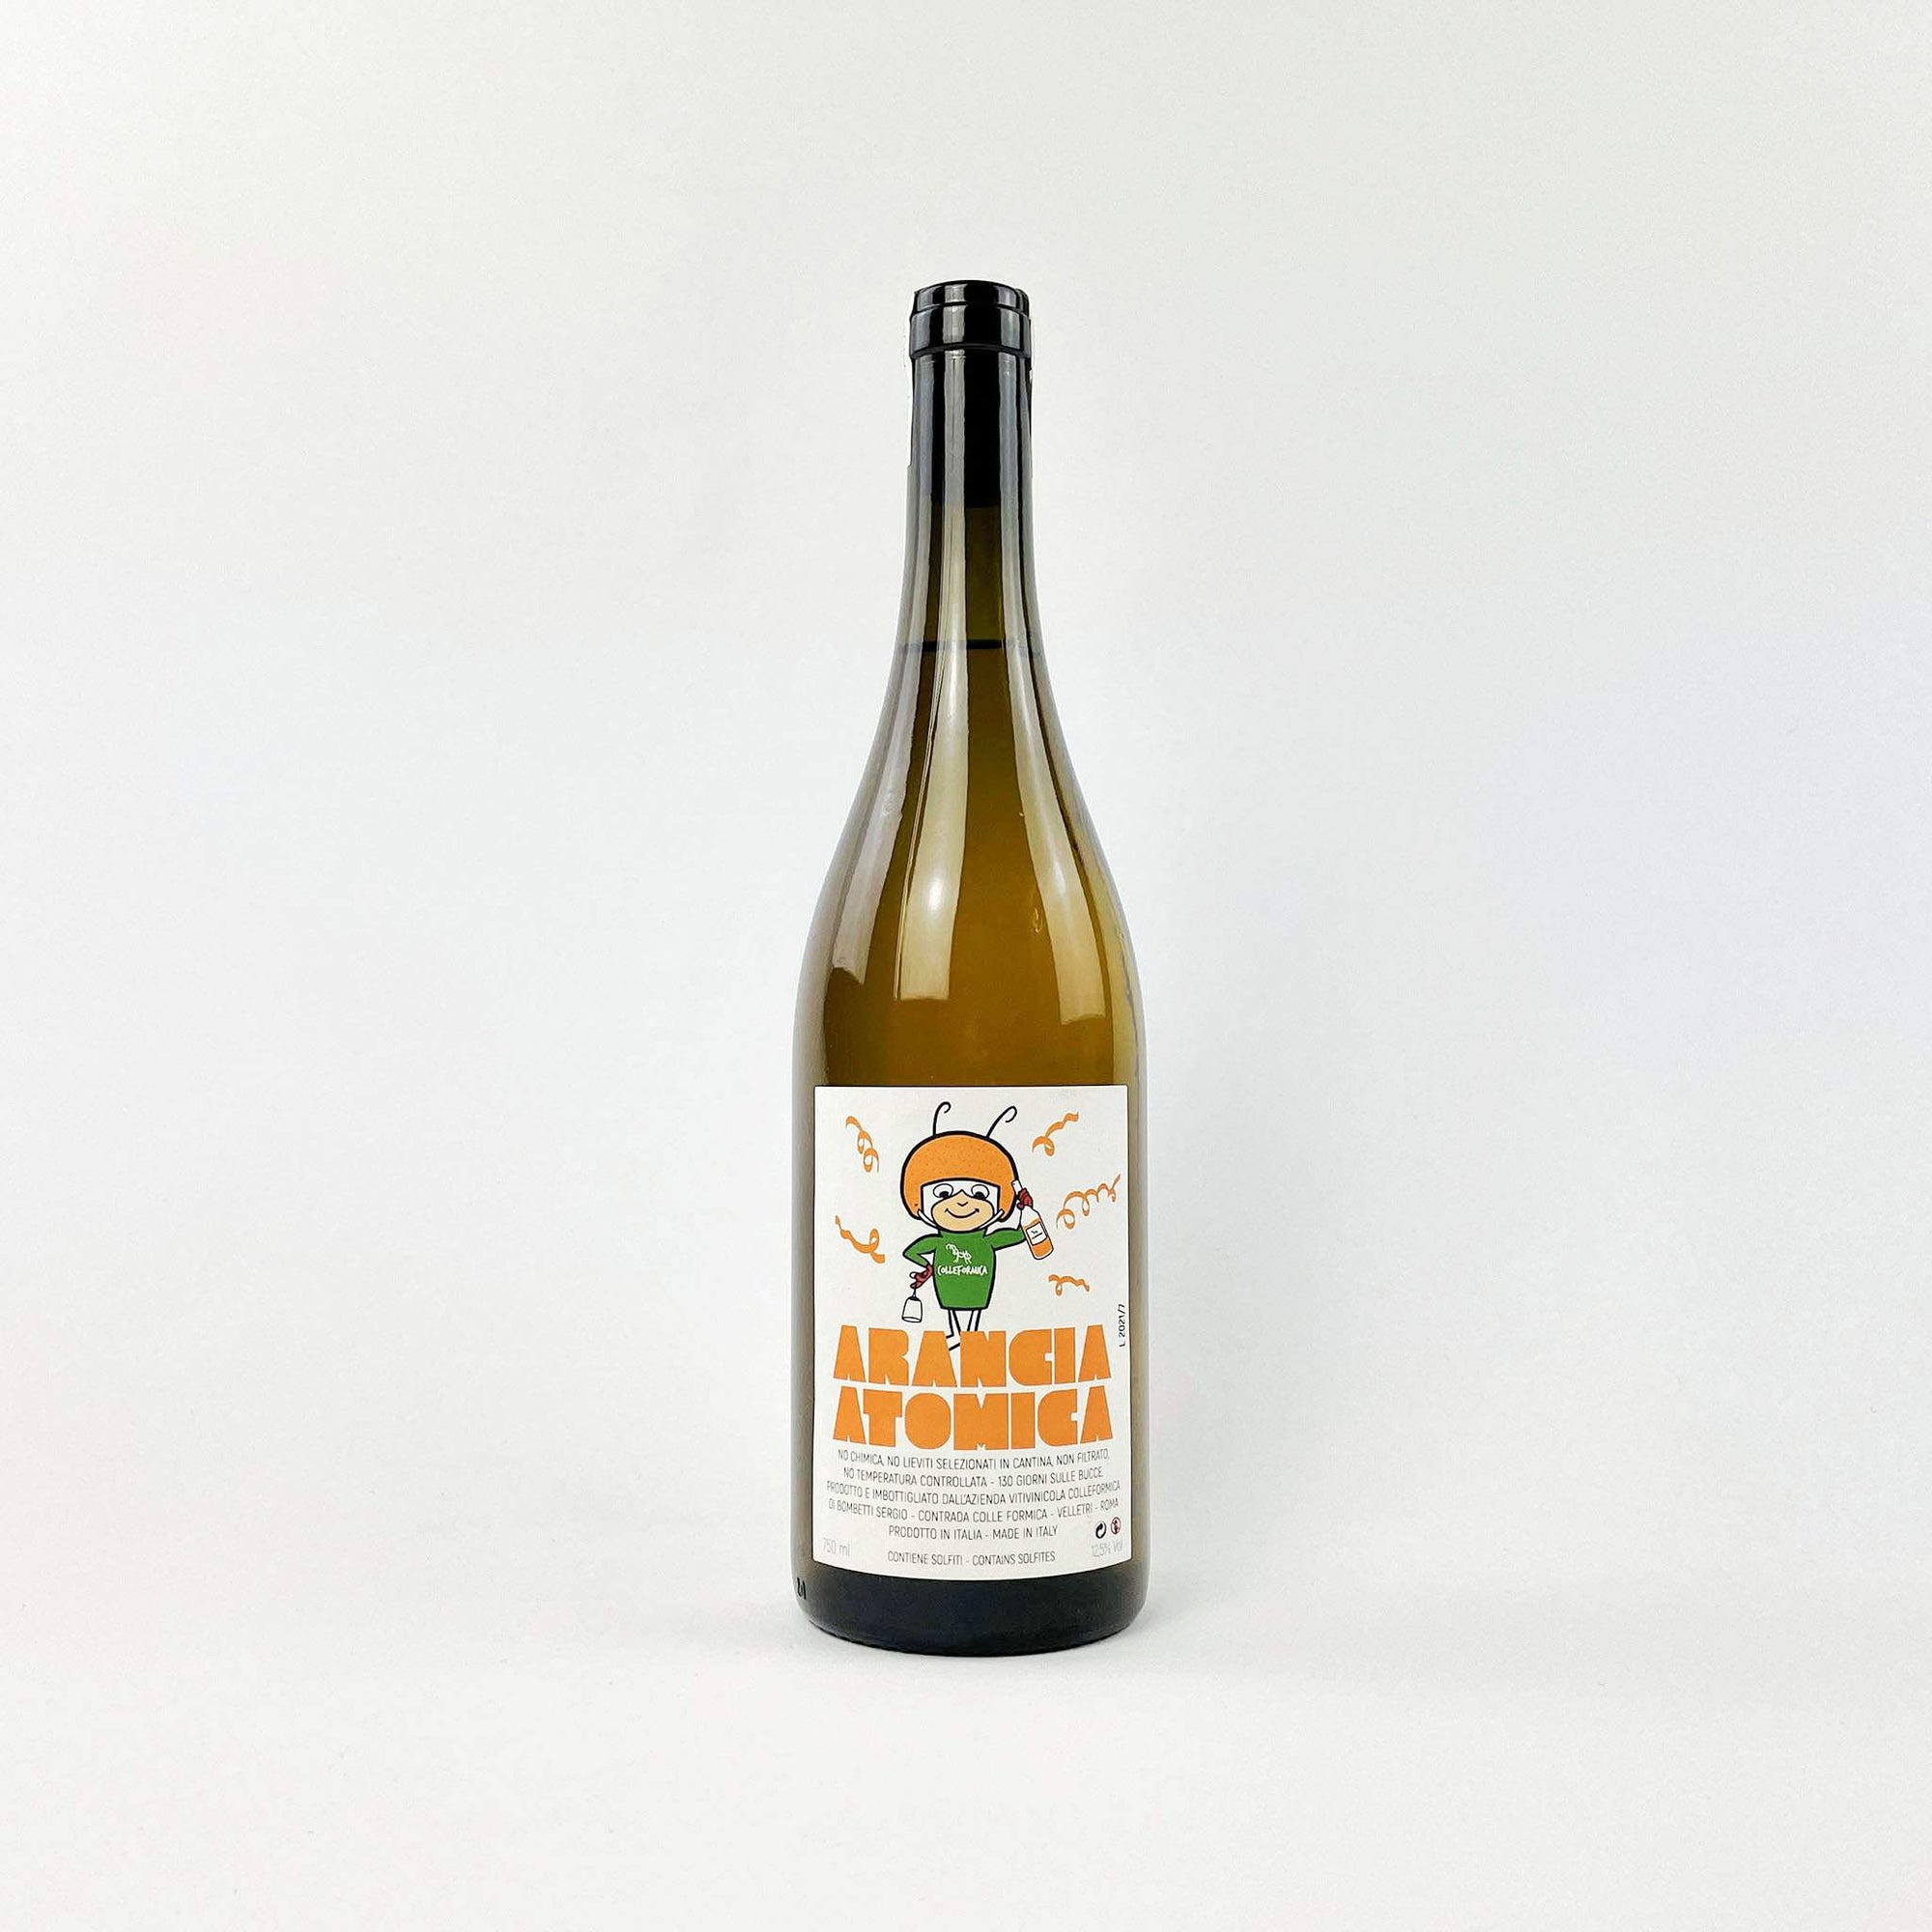 A bottle of Colleformica Arancia Atomica Orarnge Natural Wine